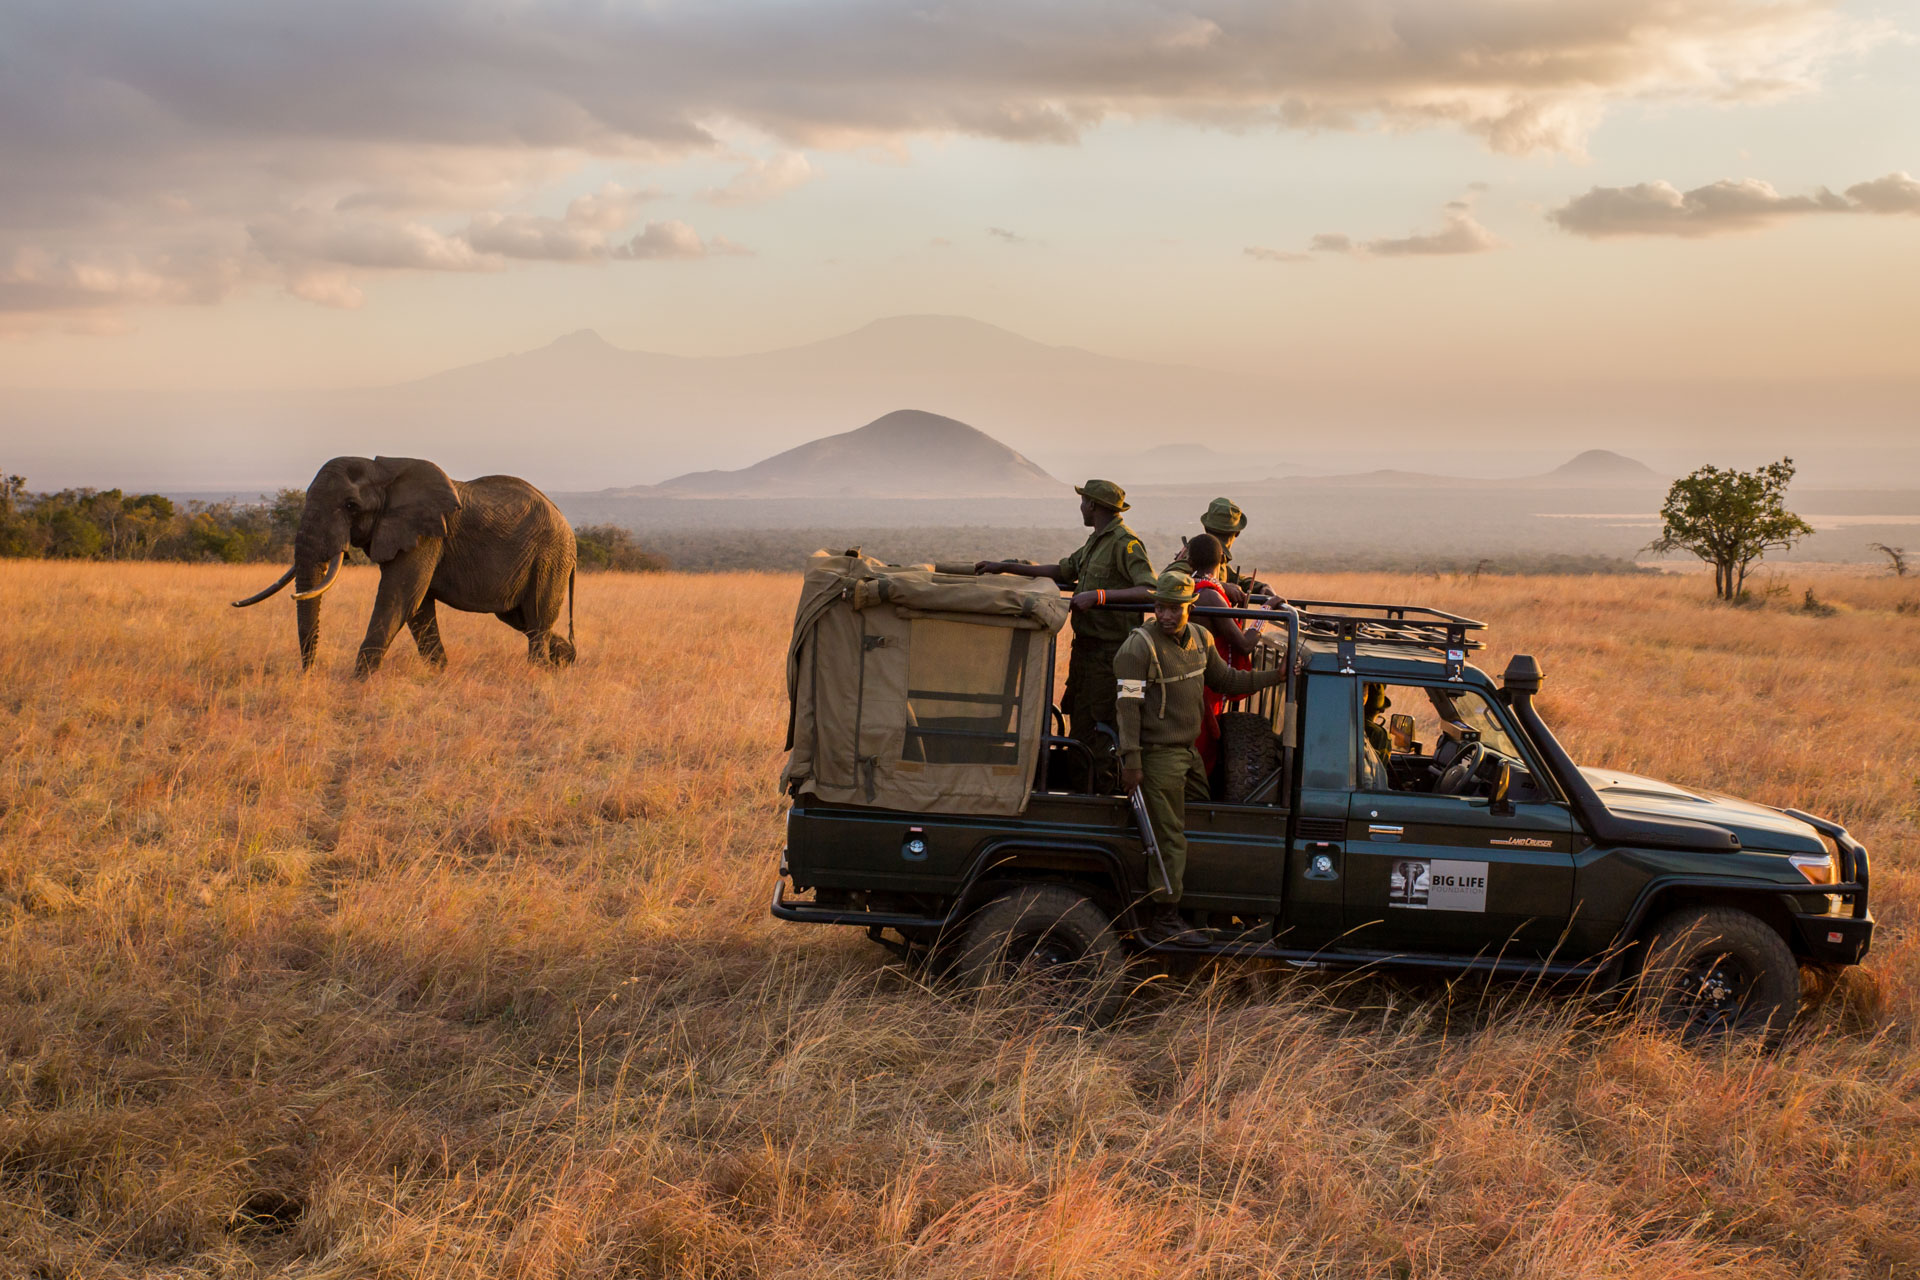 Above: Big Life rangers monitor an elephant in Amboseli